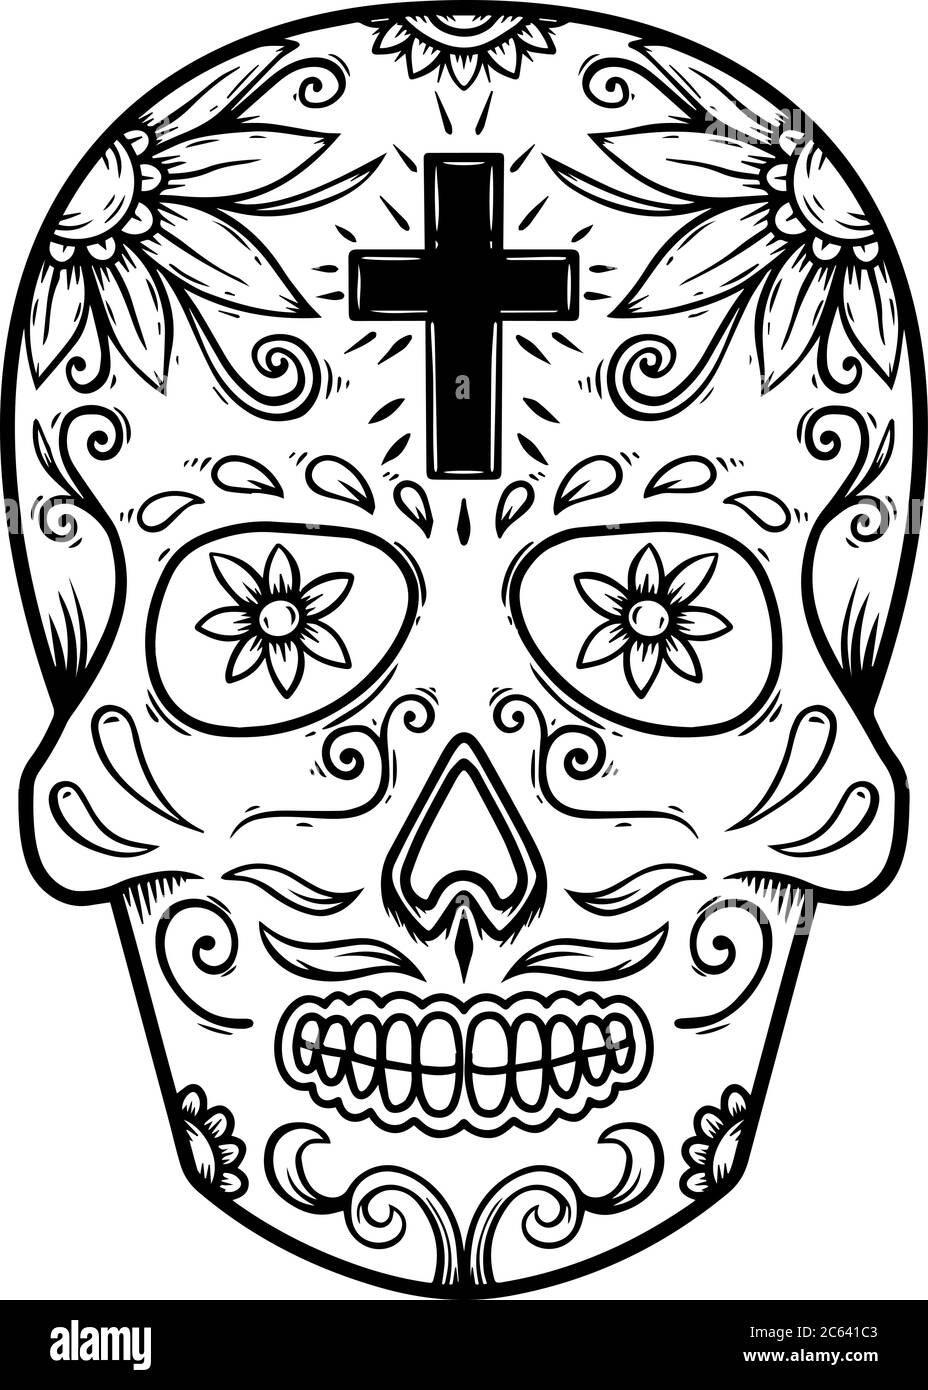 Illustration of mexican sugar skull. Design element for poster, logo, label, design. Vector illustration Stock Vector